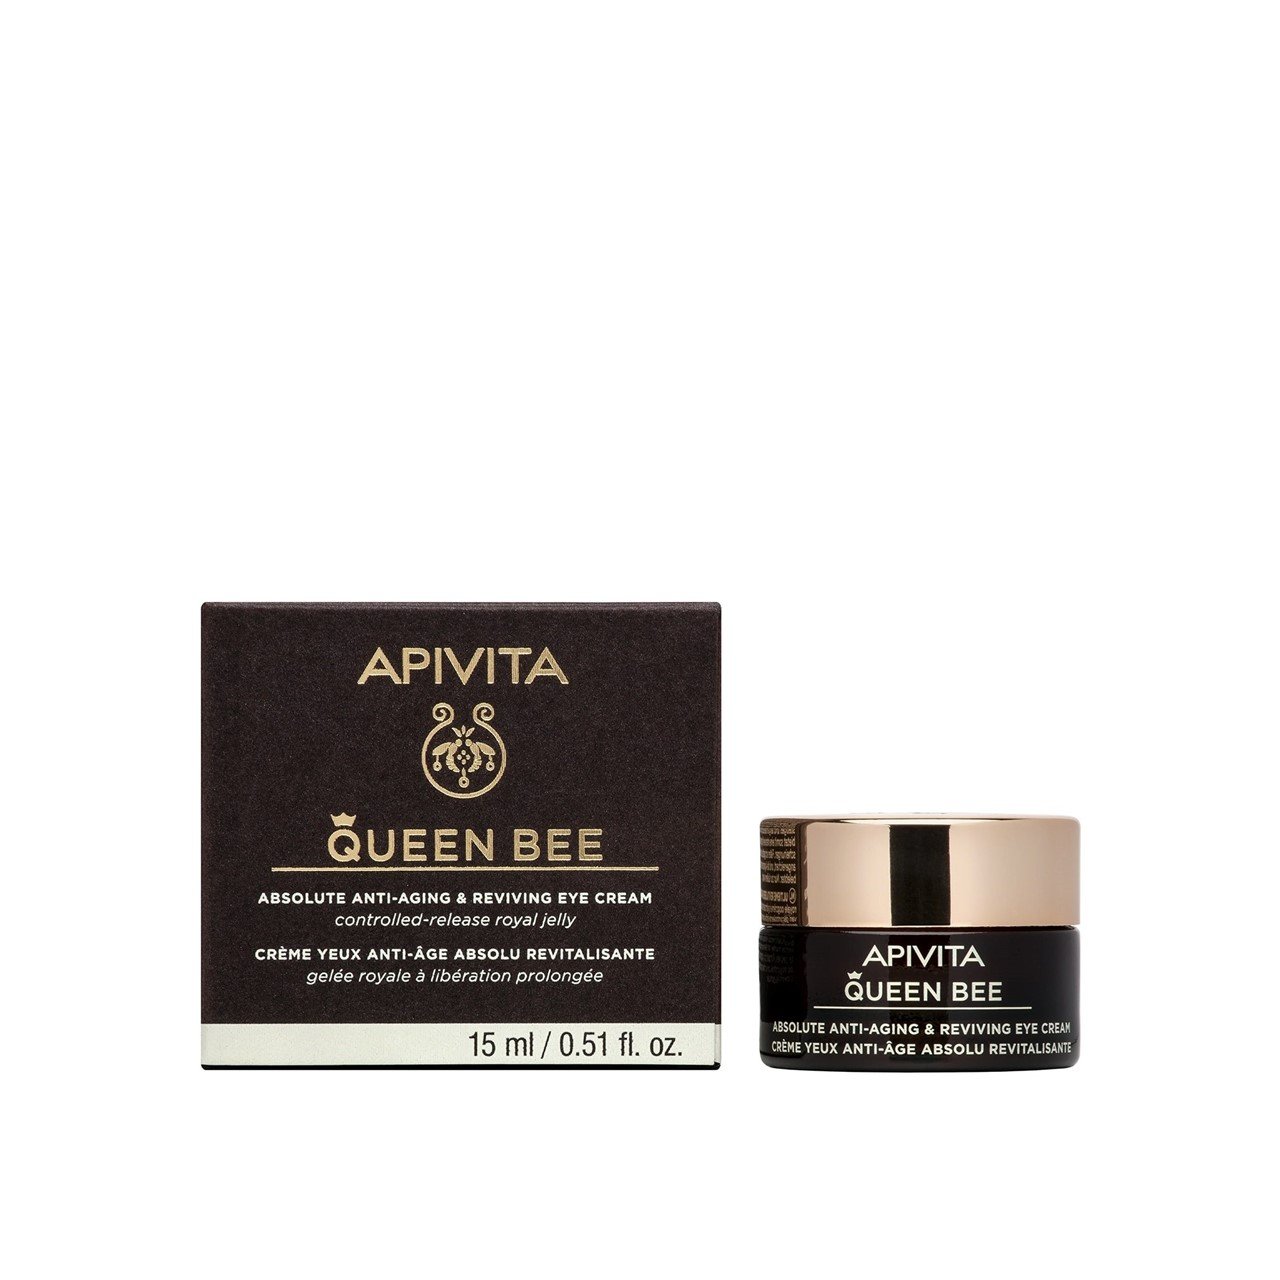 APIVITA Queen Bee Absolute Anti-Aging & Reviving Eye Cream 15ml